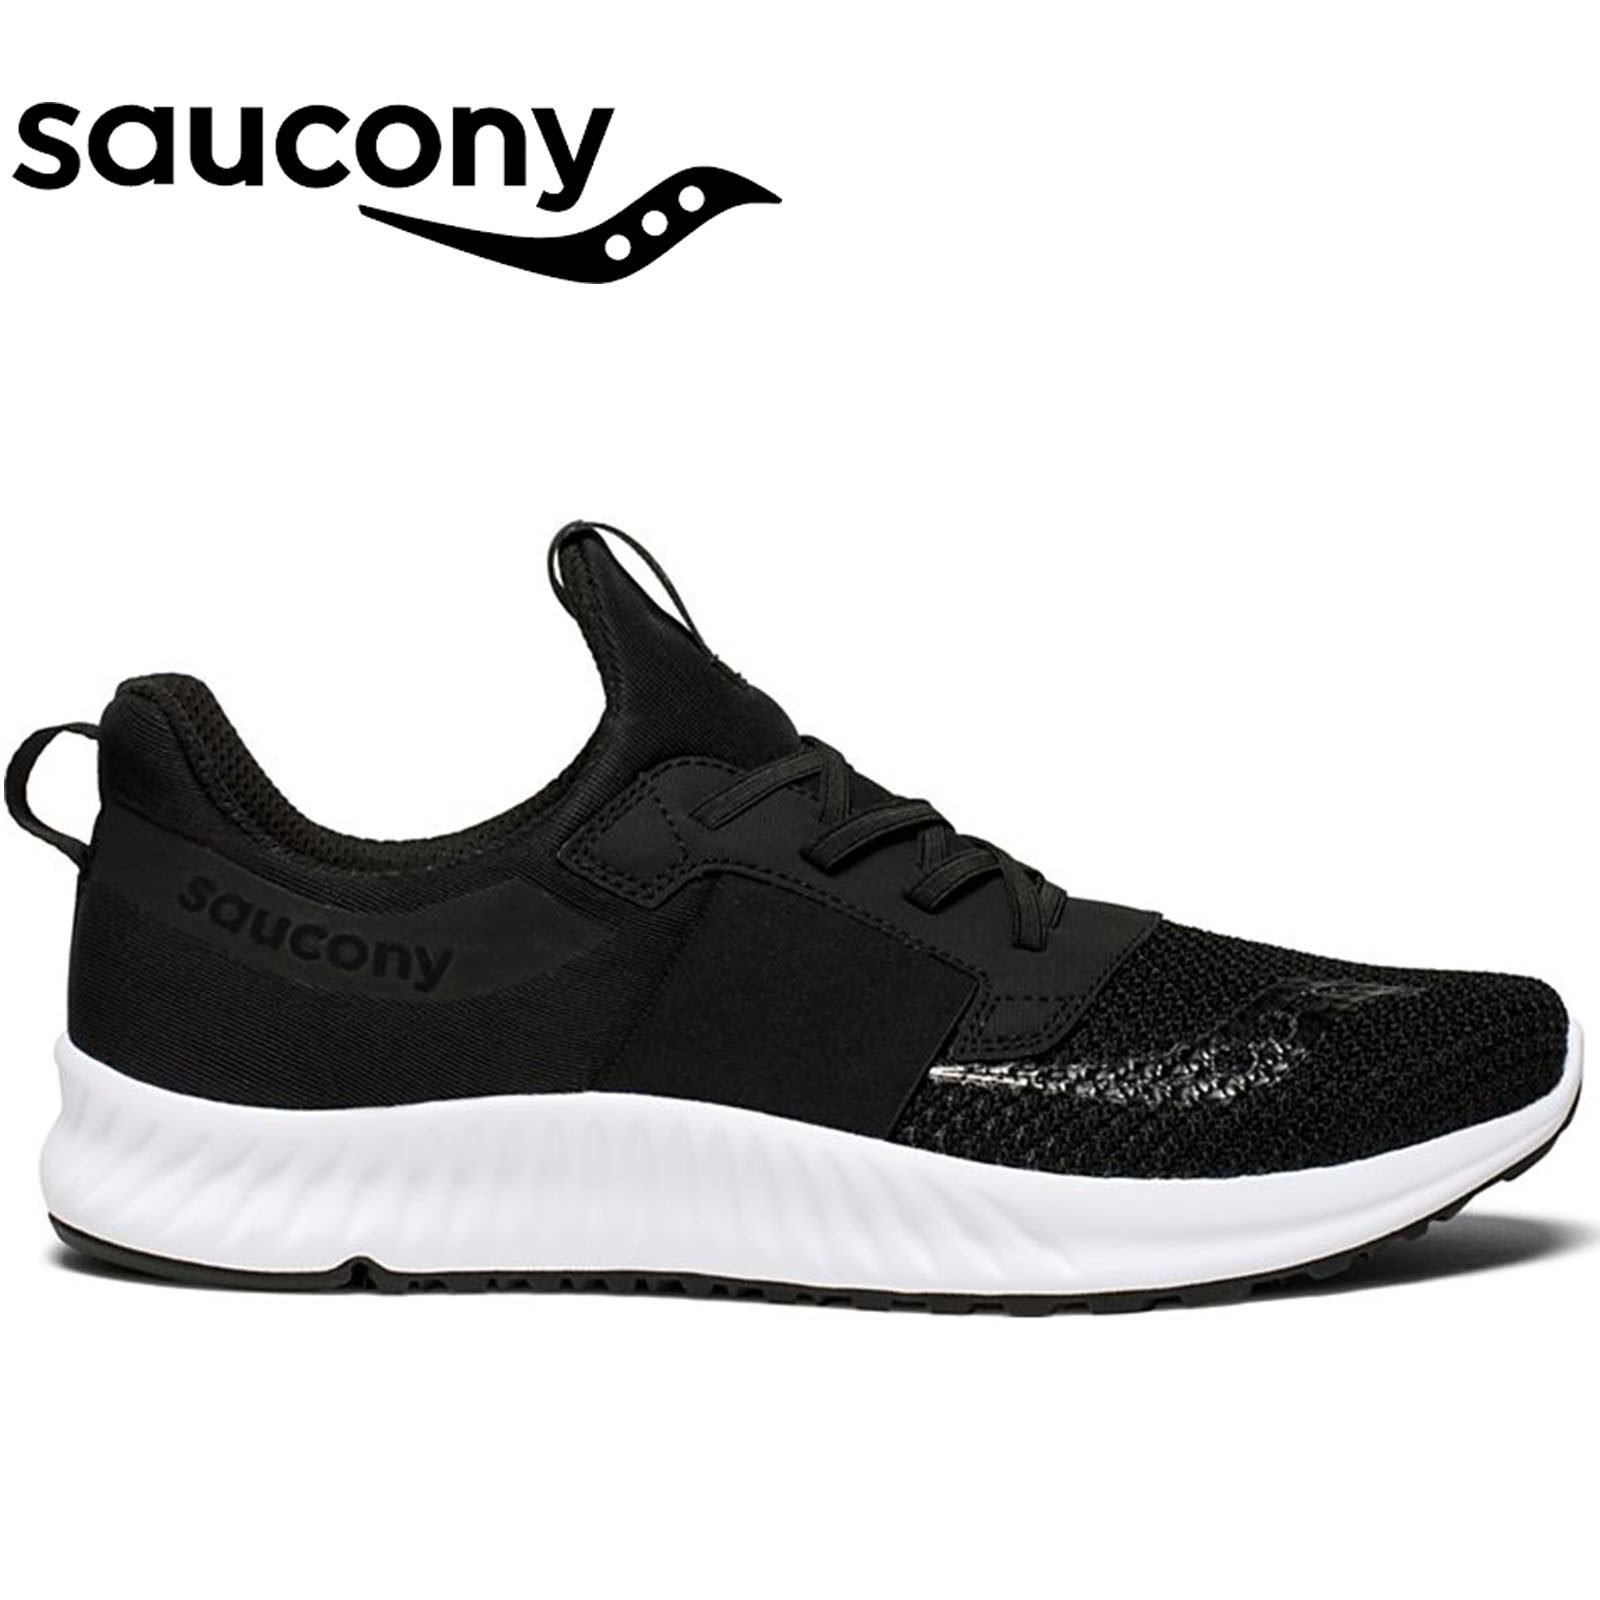 saucony memory foam running shoe